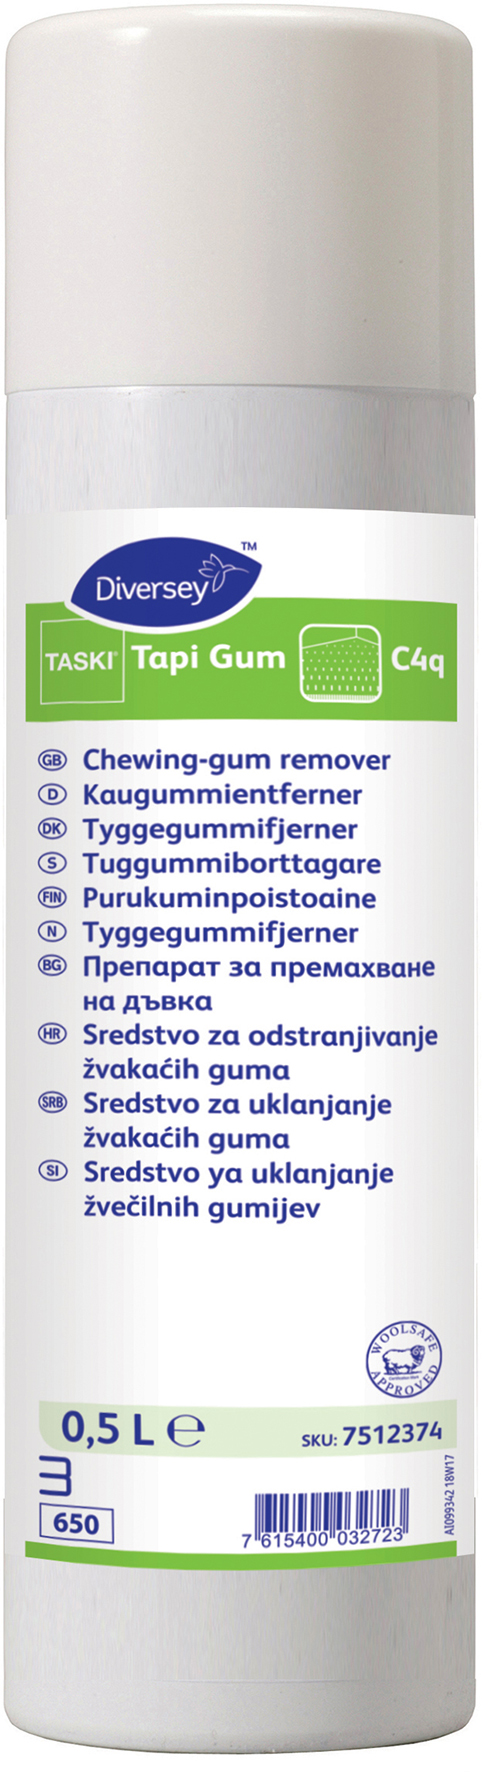 Taski Tapi Gum W412 0,5L - Paper & Stuff - Oslagbara Priser